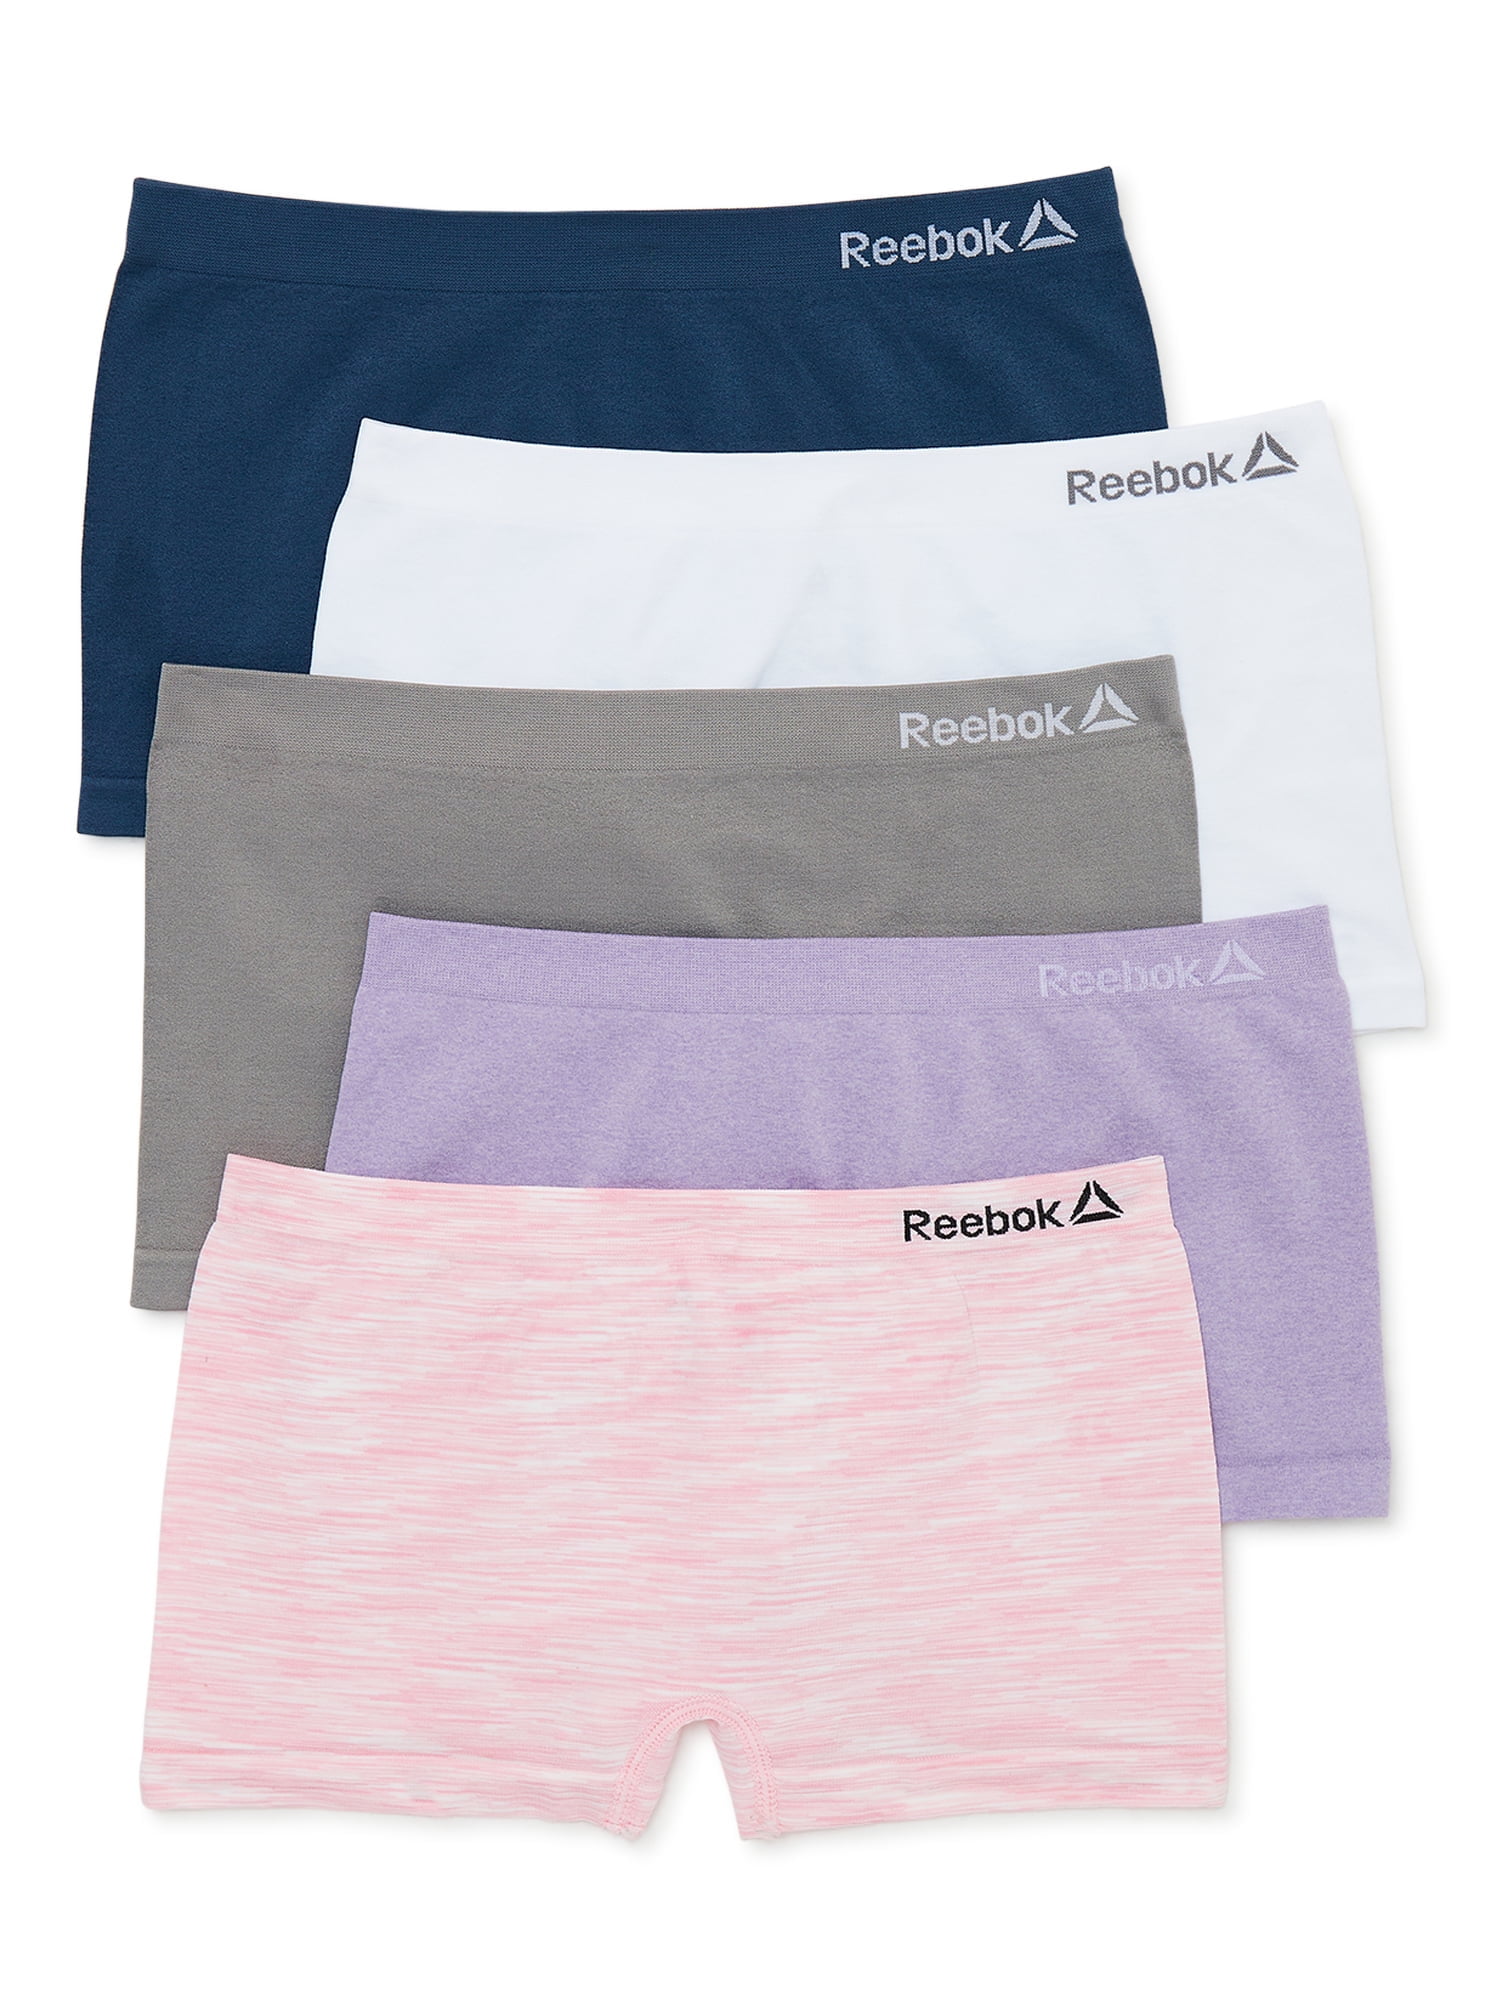 Reebok Girls Seamless Boyshorts Panties, Medium, 5-Pack - Walmart.com